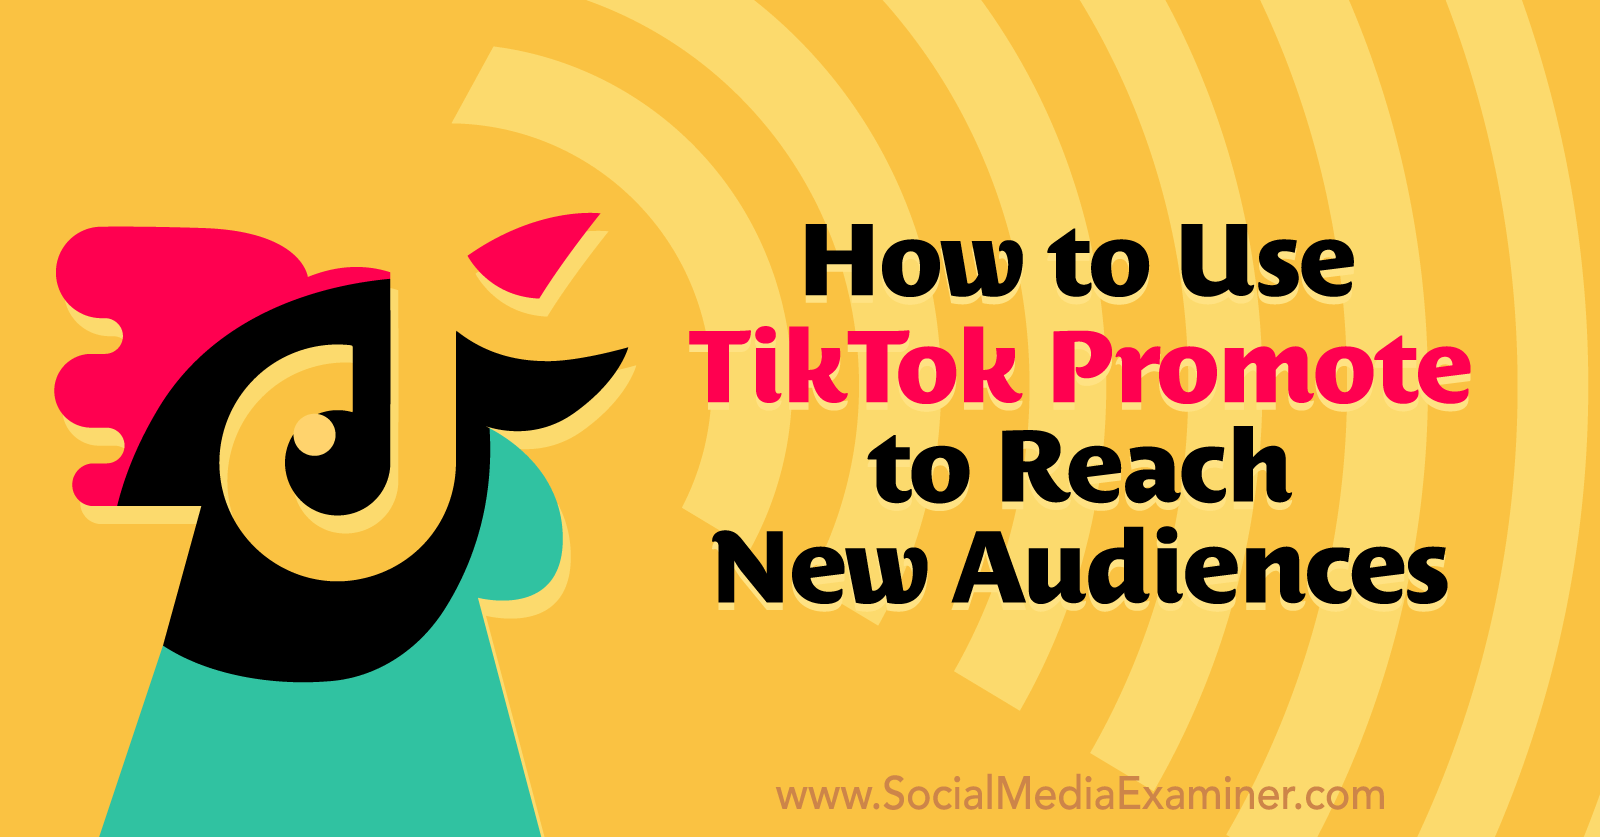 How to Use TikTok Promote to Reach New Audiences Social Media Examiner